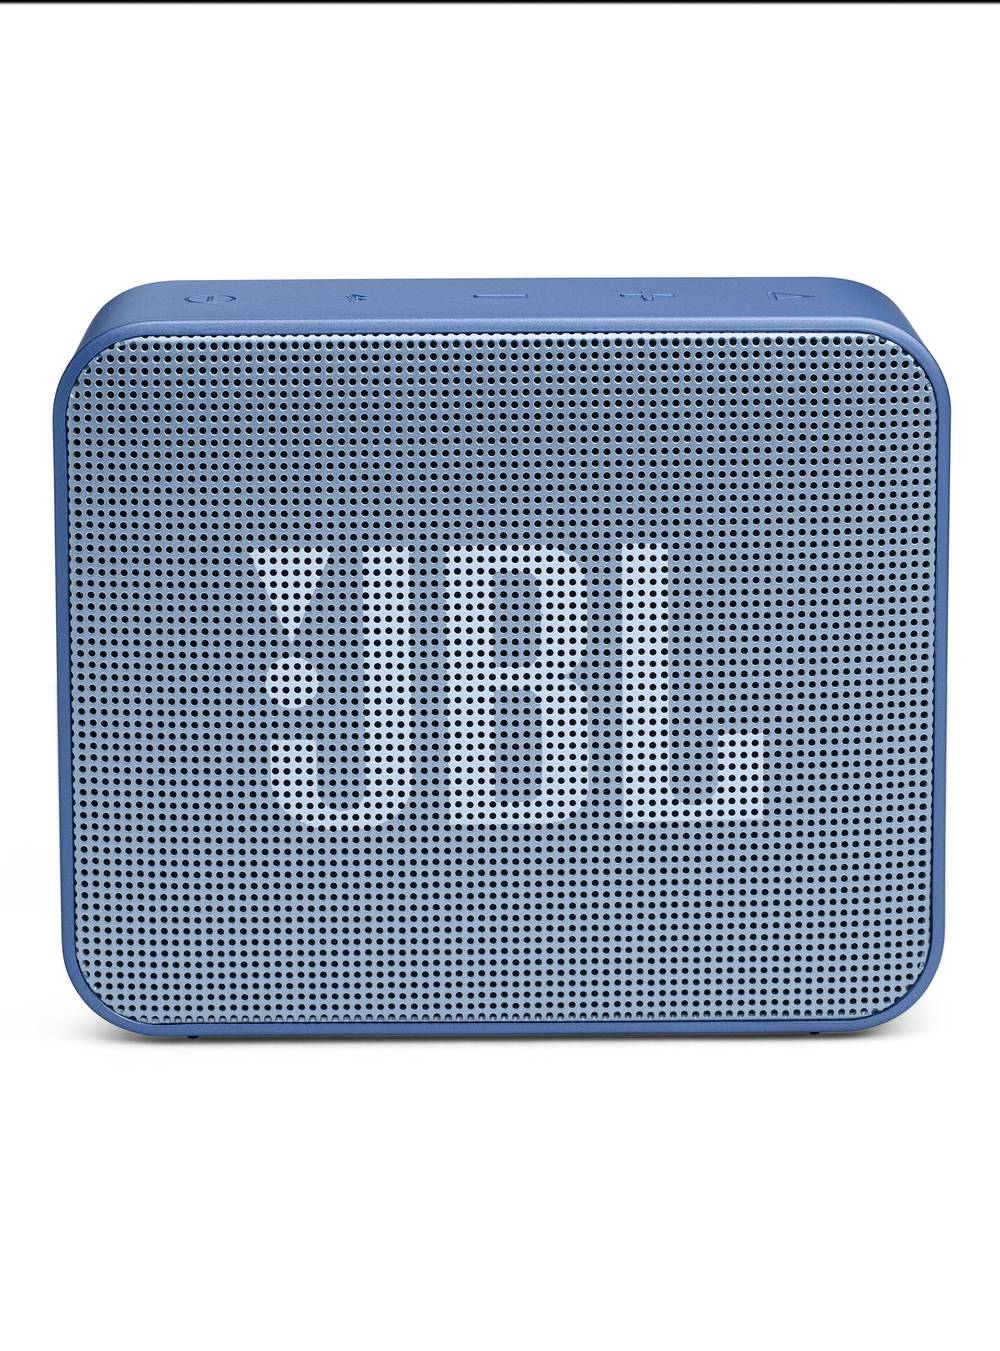 Jbl parlante bluetooth go essential blue (1 u)